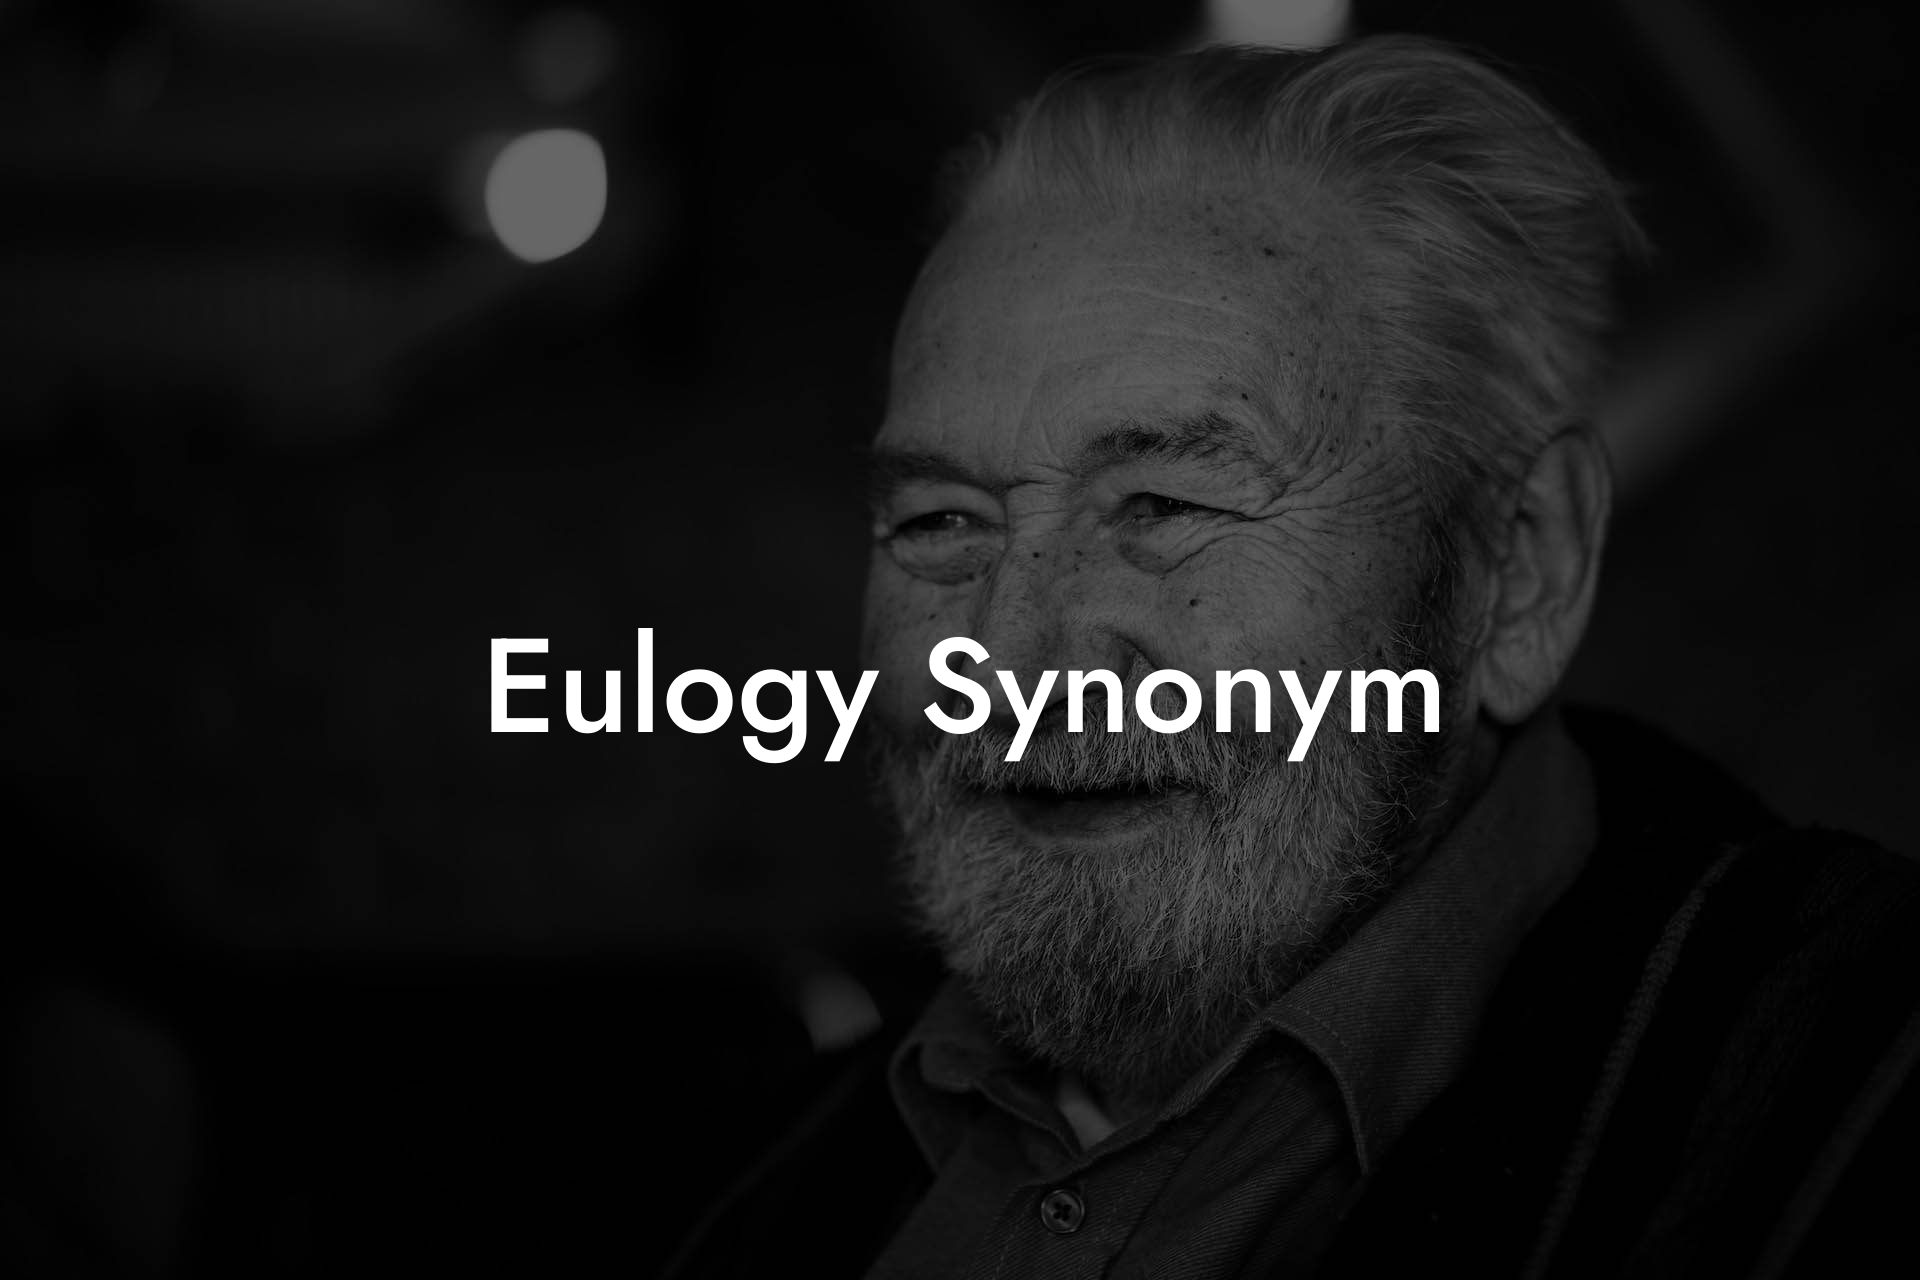 Eulogy Synonym